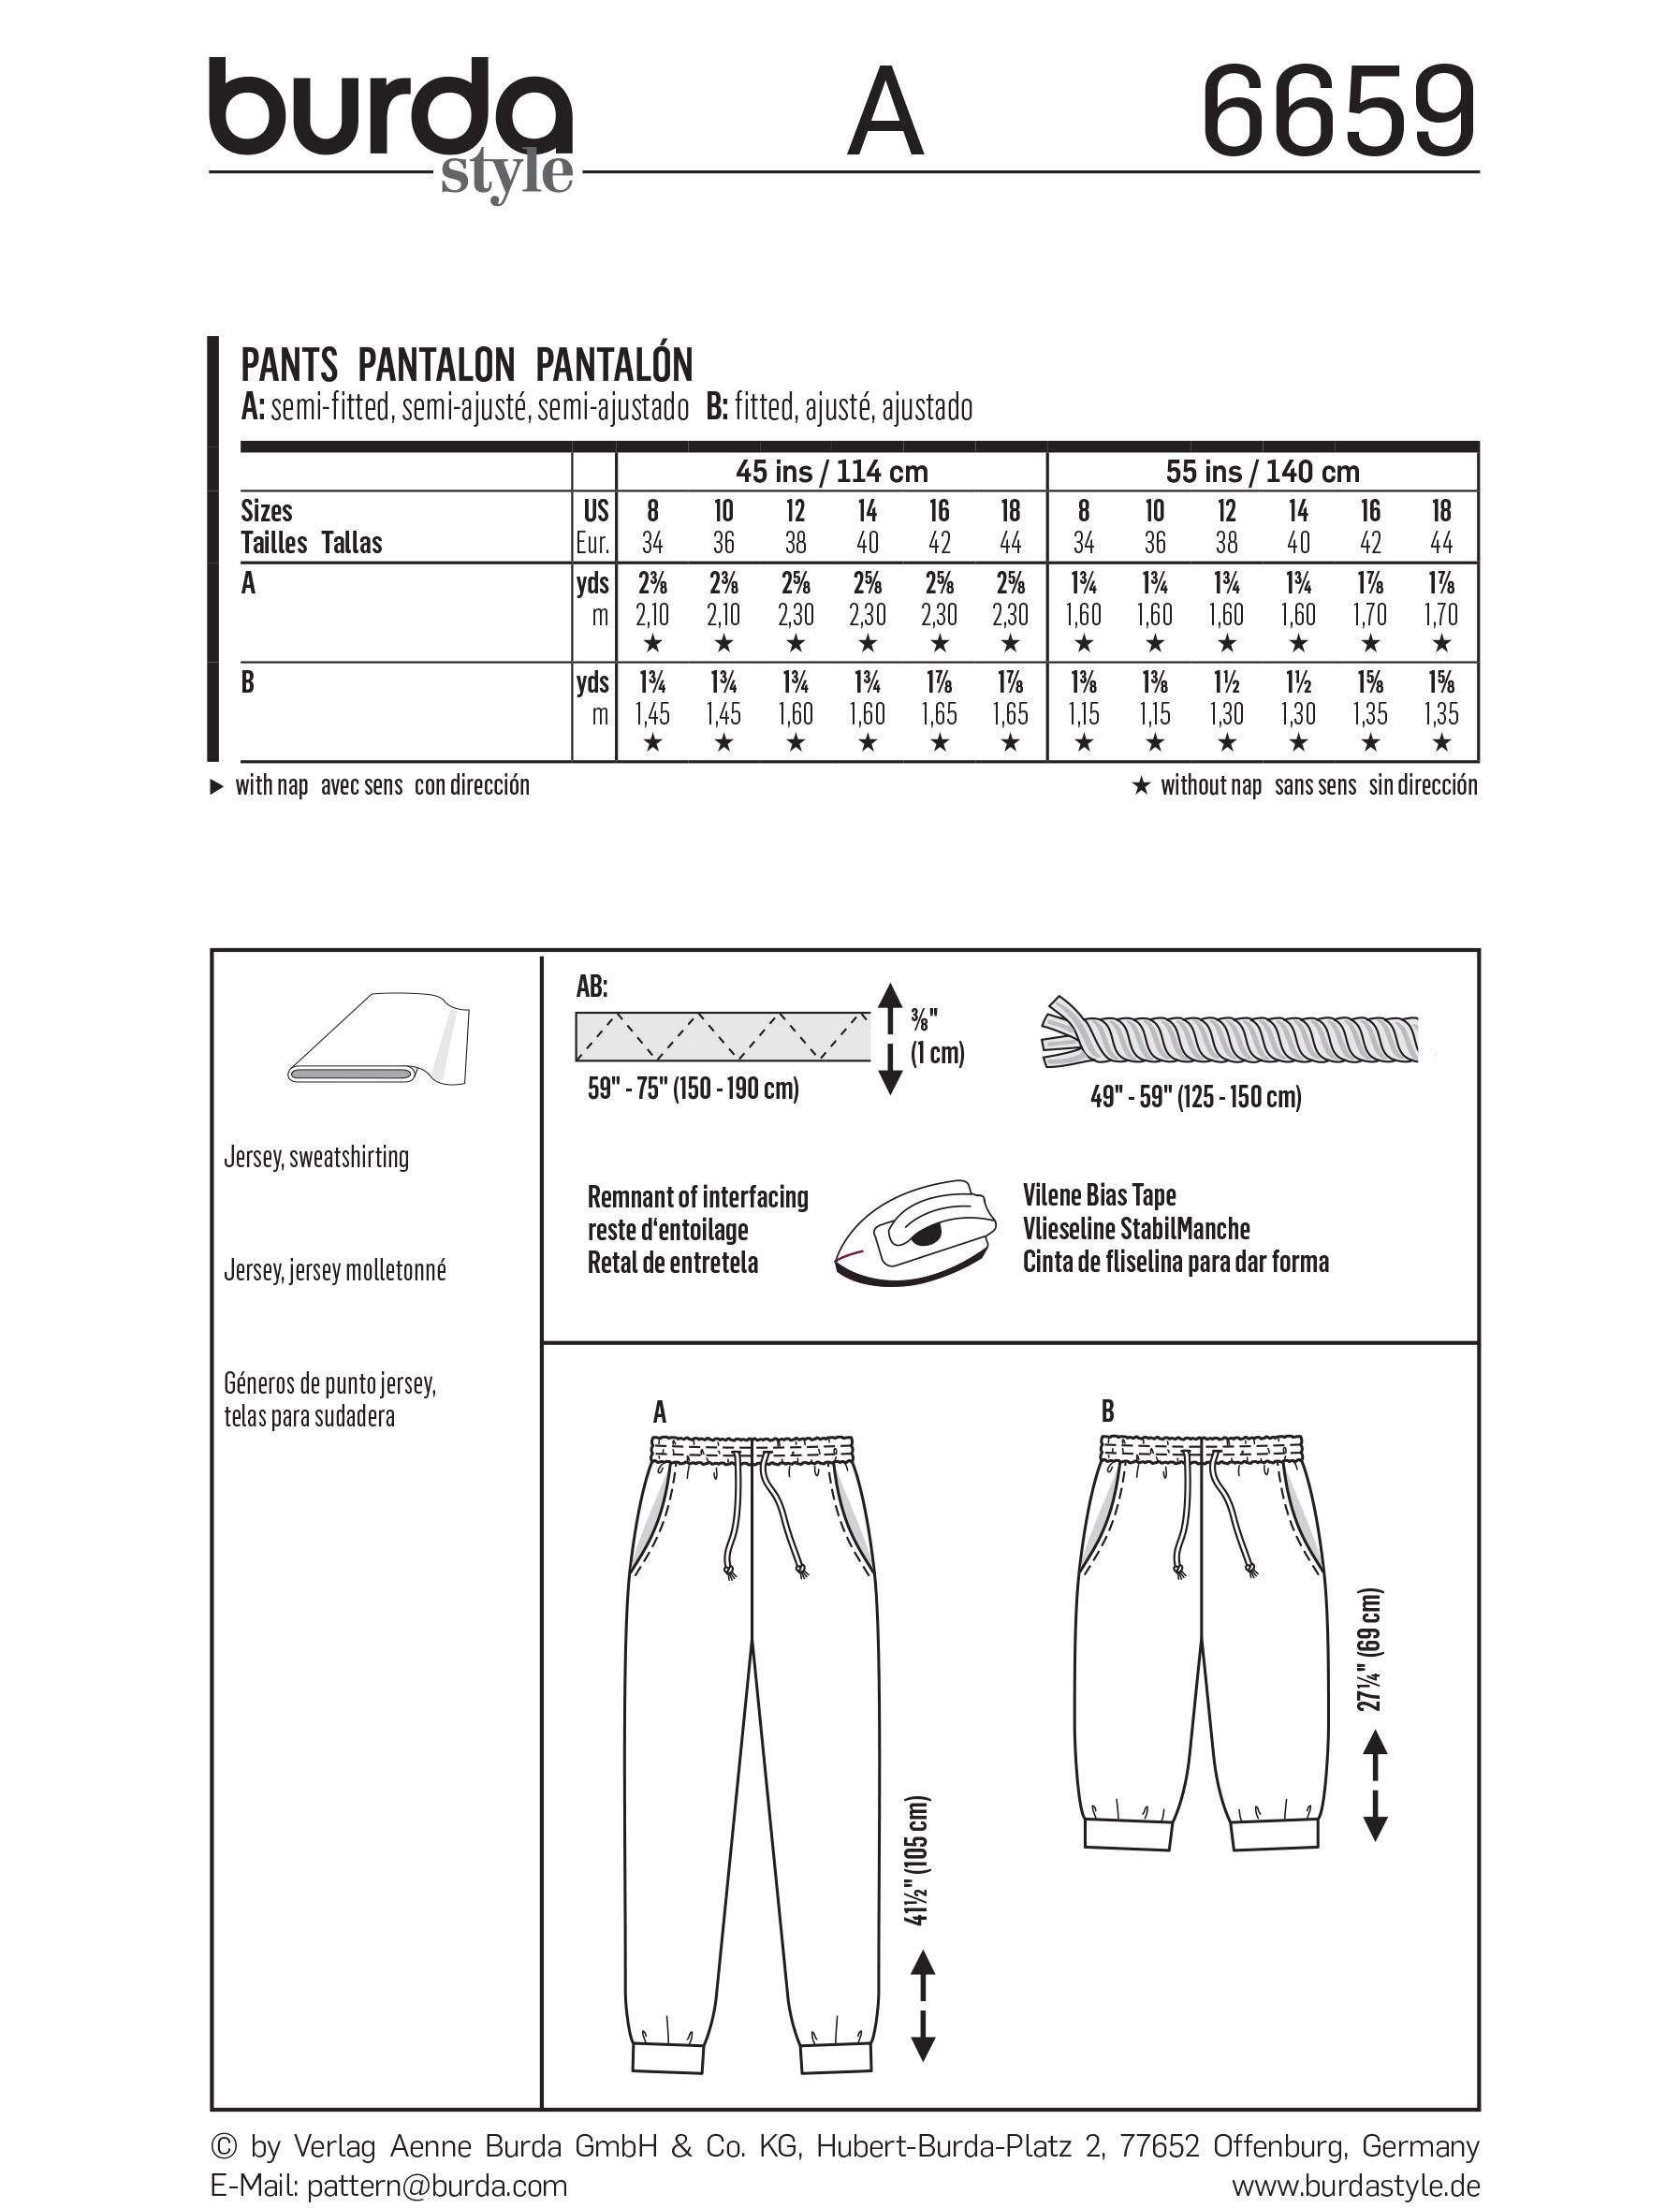 Burda B6659 Women's Trousers Sewing Pattern